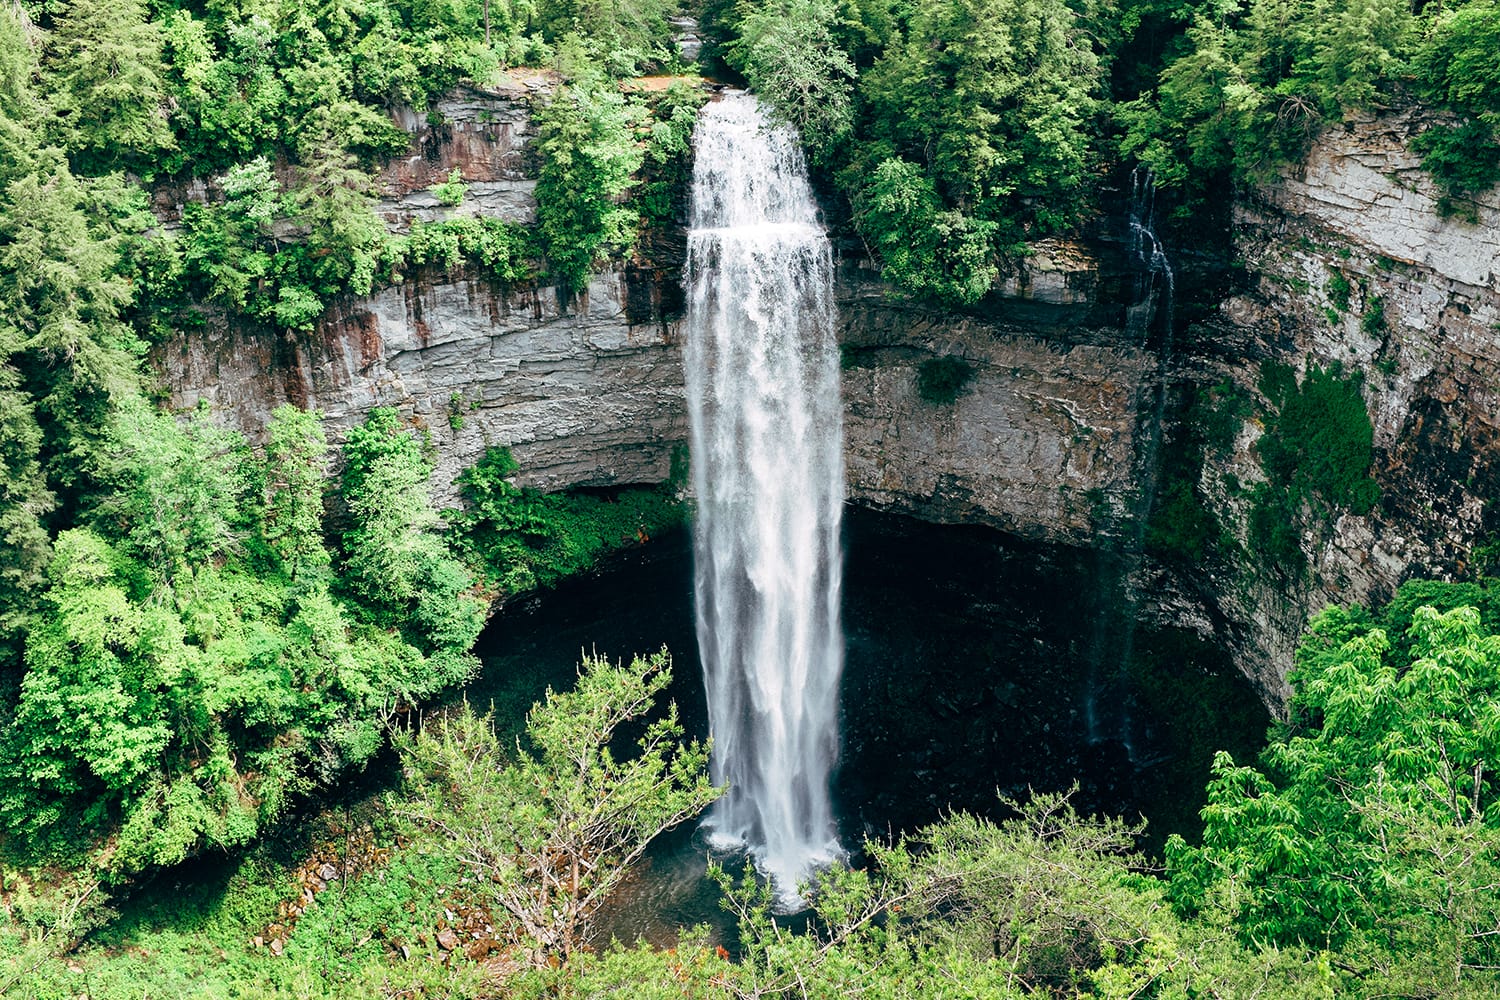 The beautiful Fall Creek Falls waterfall in Spencer, Tennessee, USA